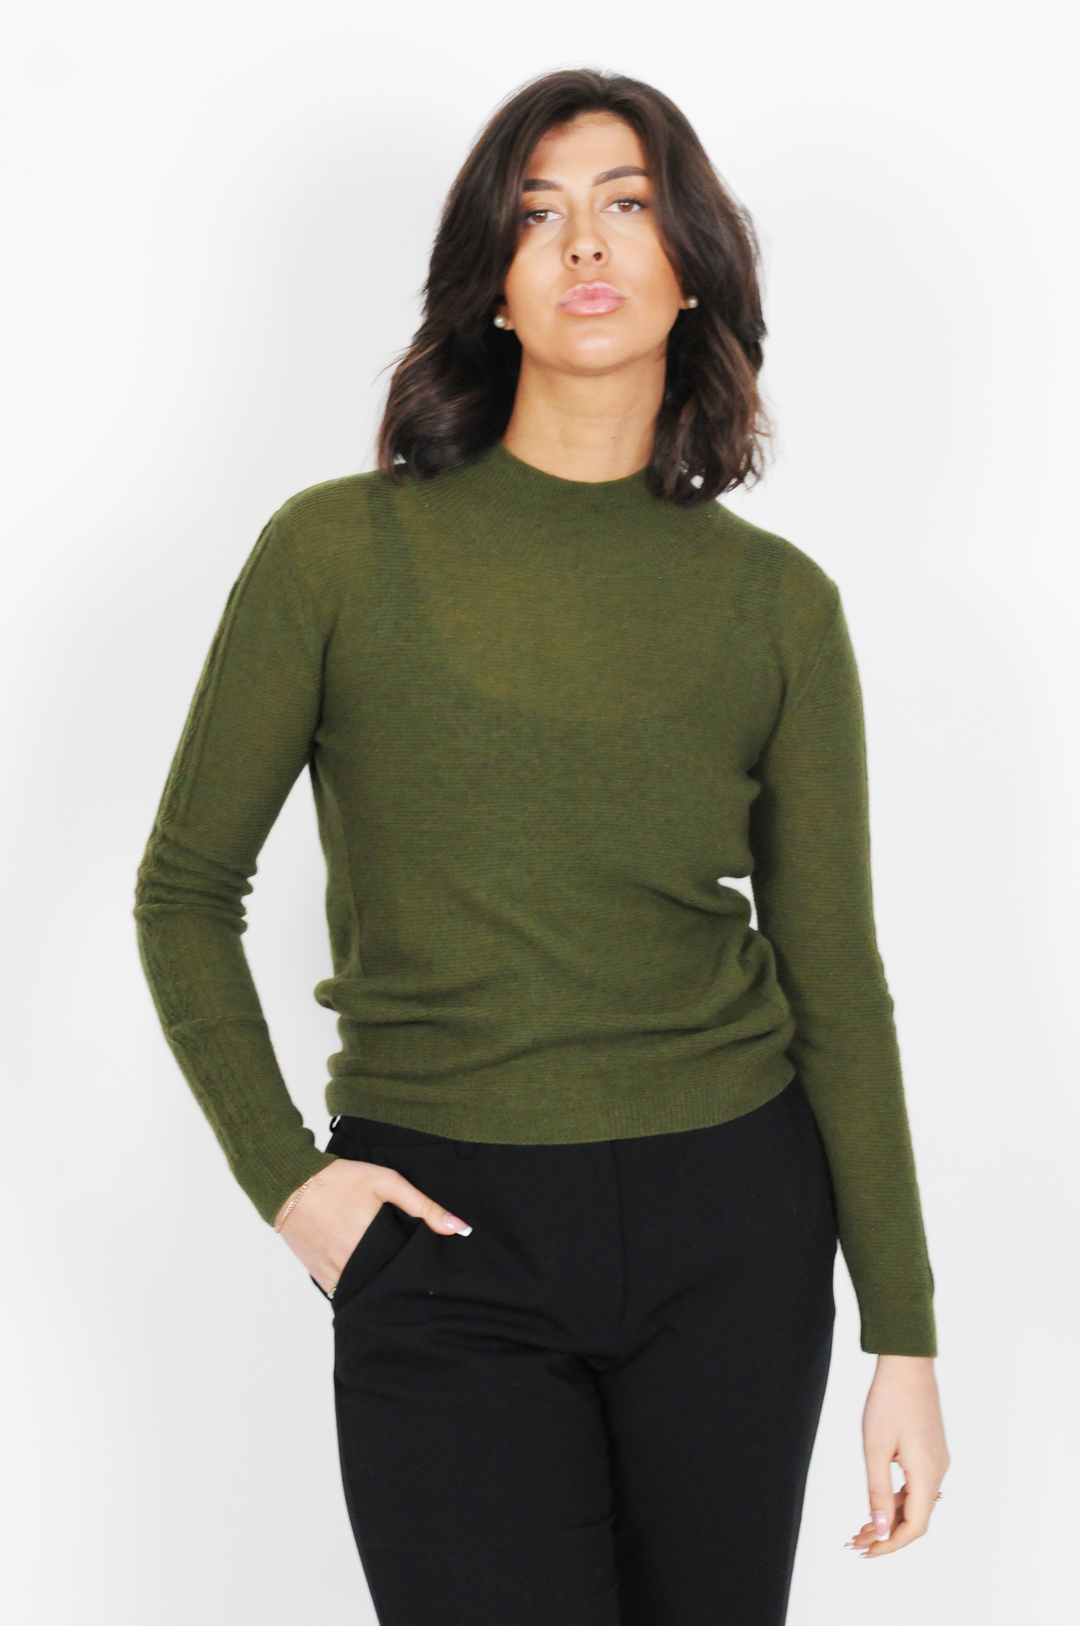 MKI Sweater - 100% Wool - Accessories - Green